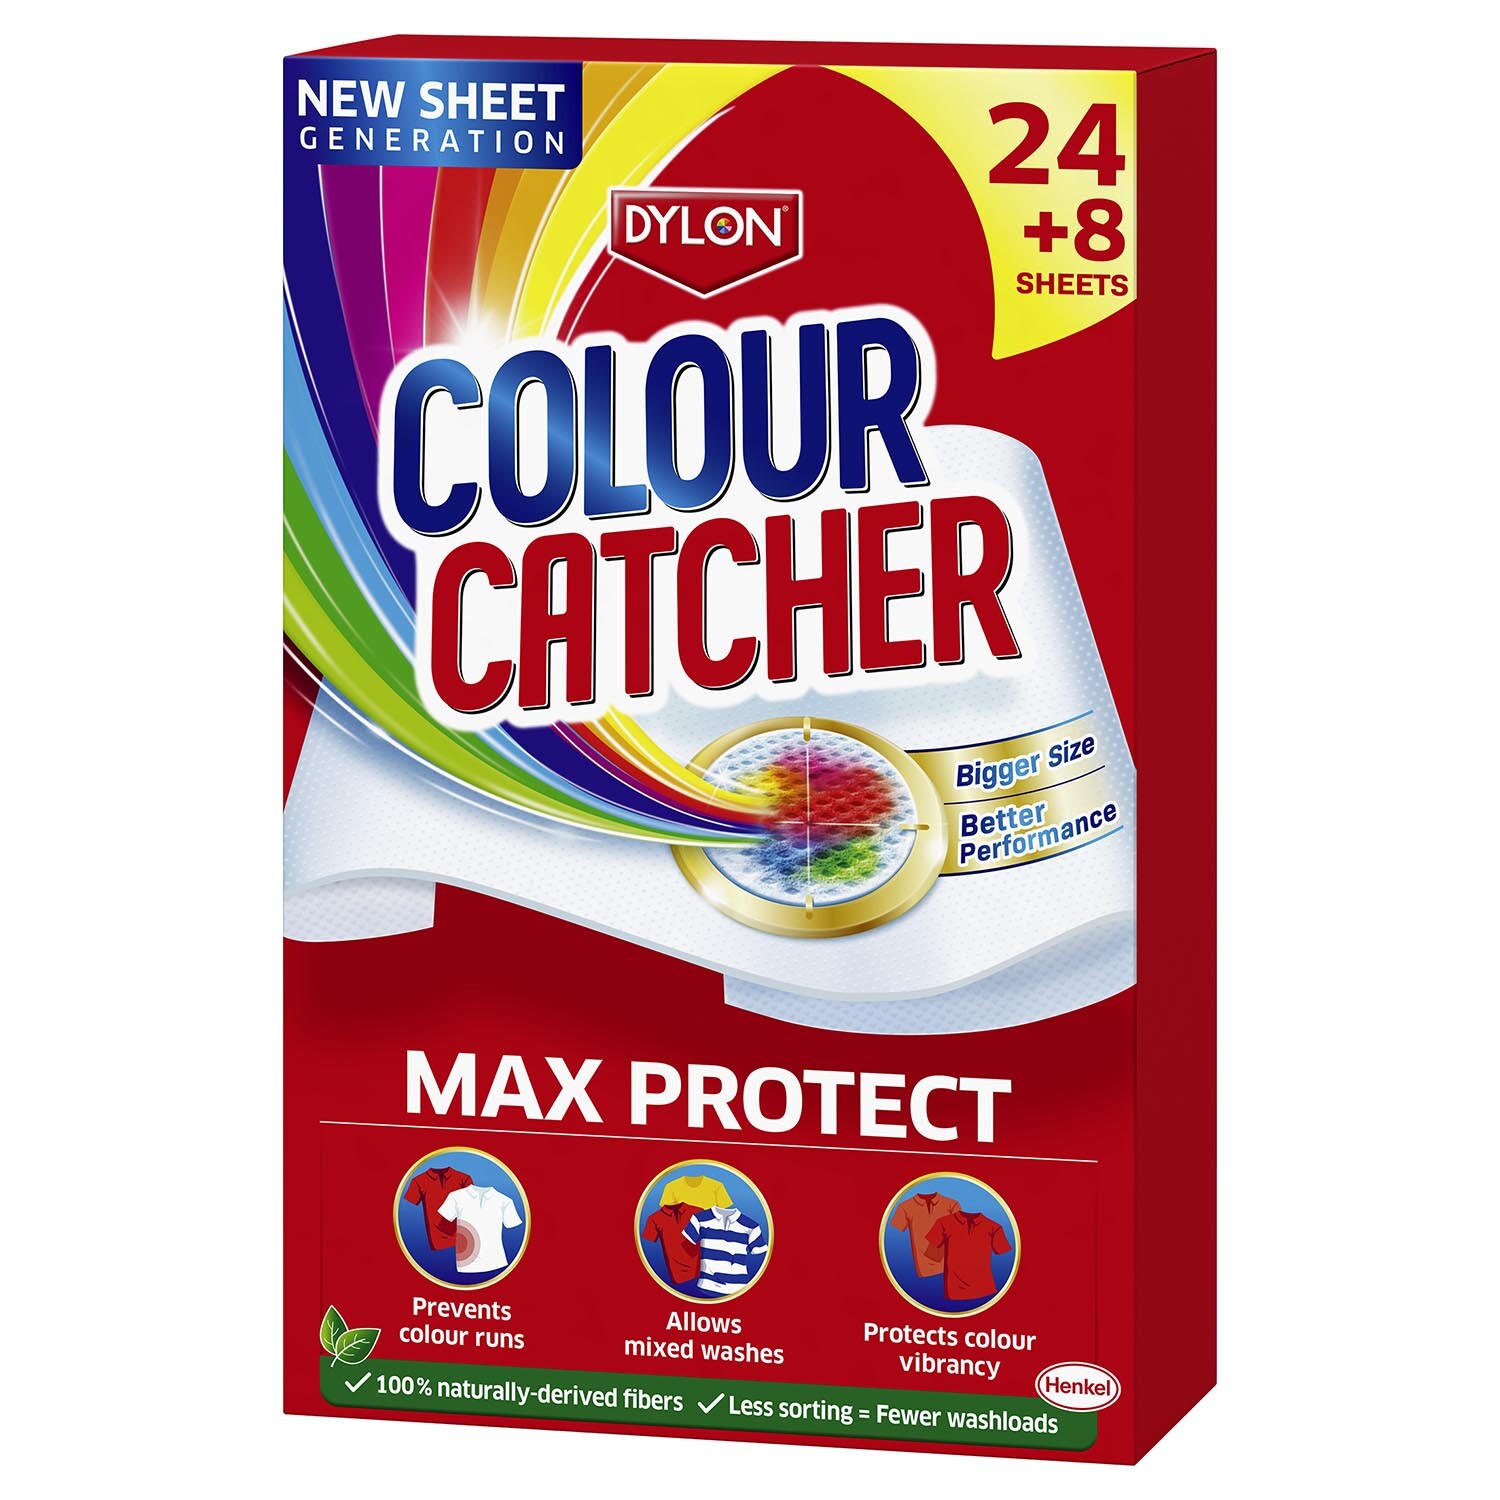 Colour Catcher Max Protect Image